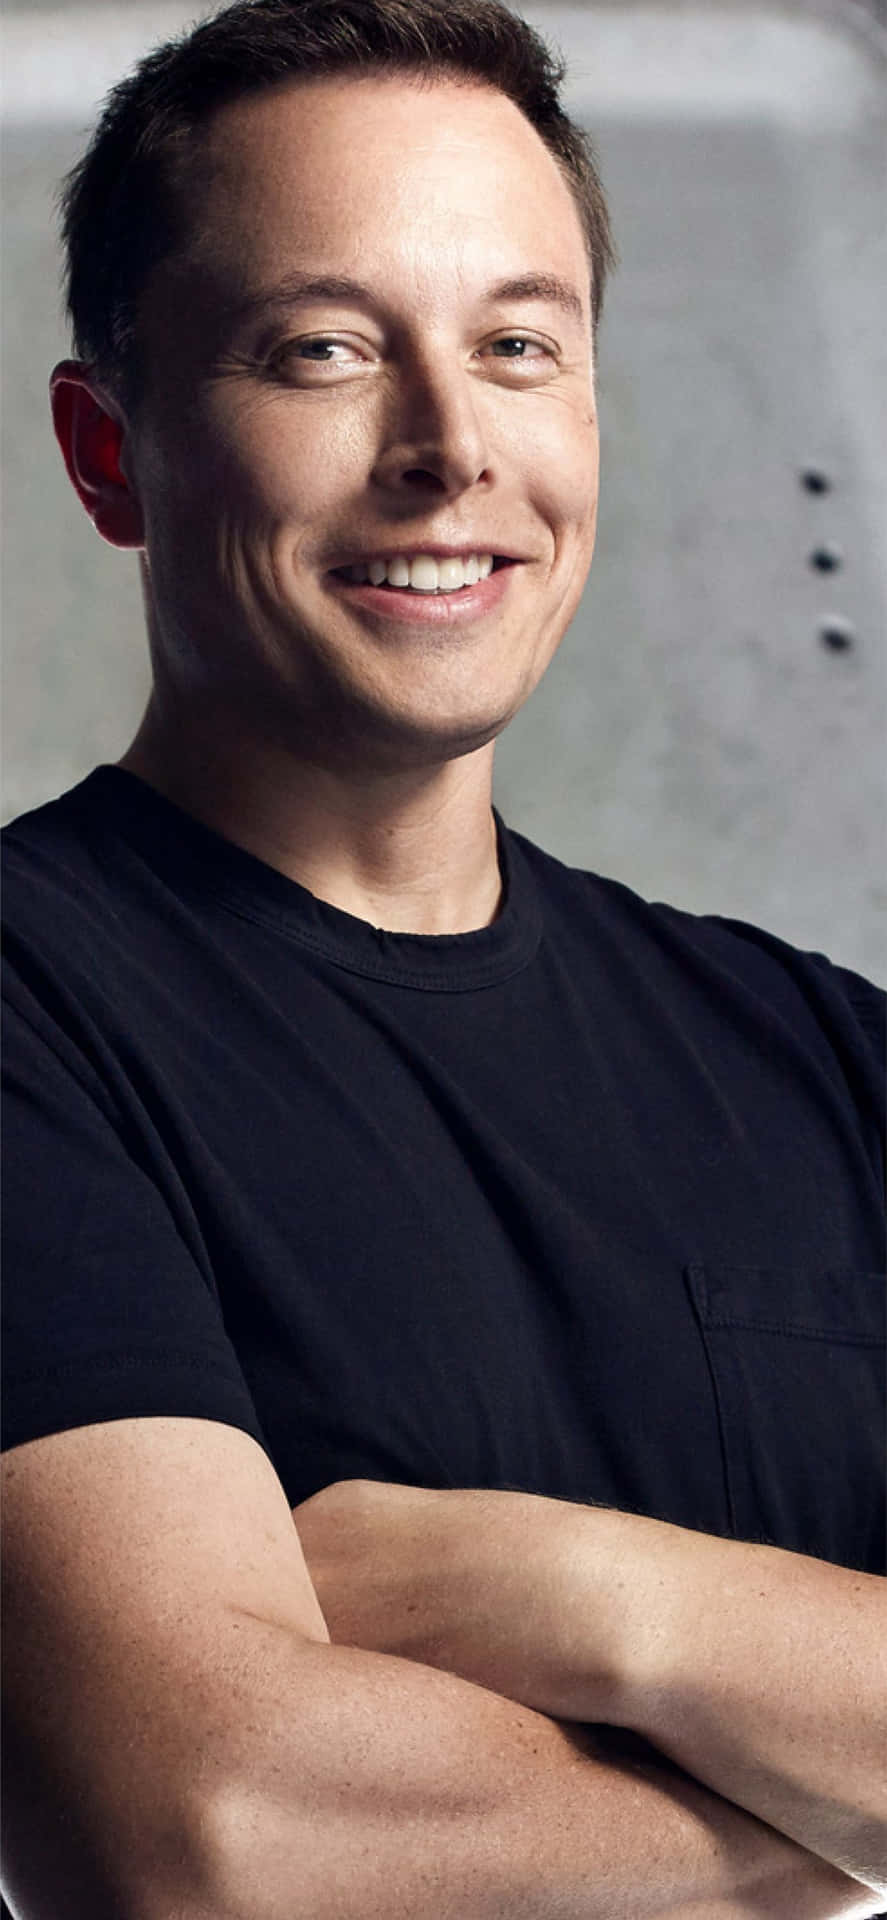 Portrait Photography Elon Musk Smiling Wallpaper